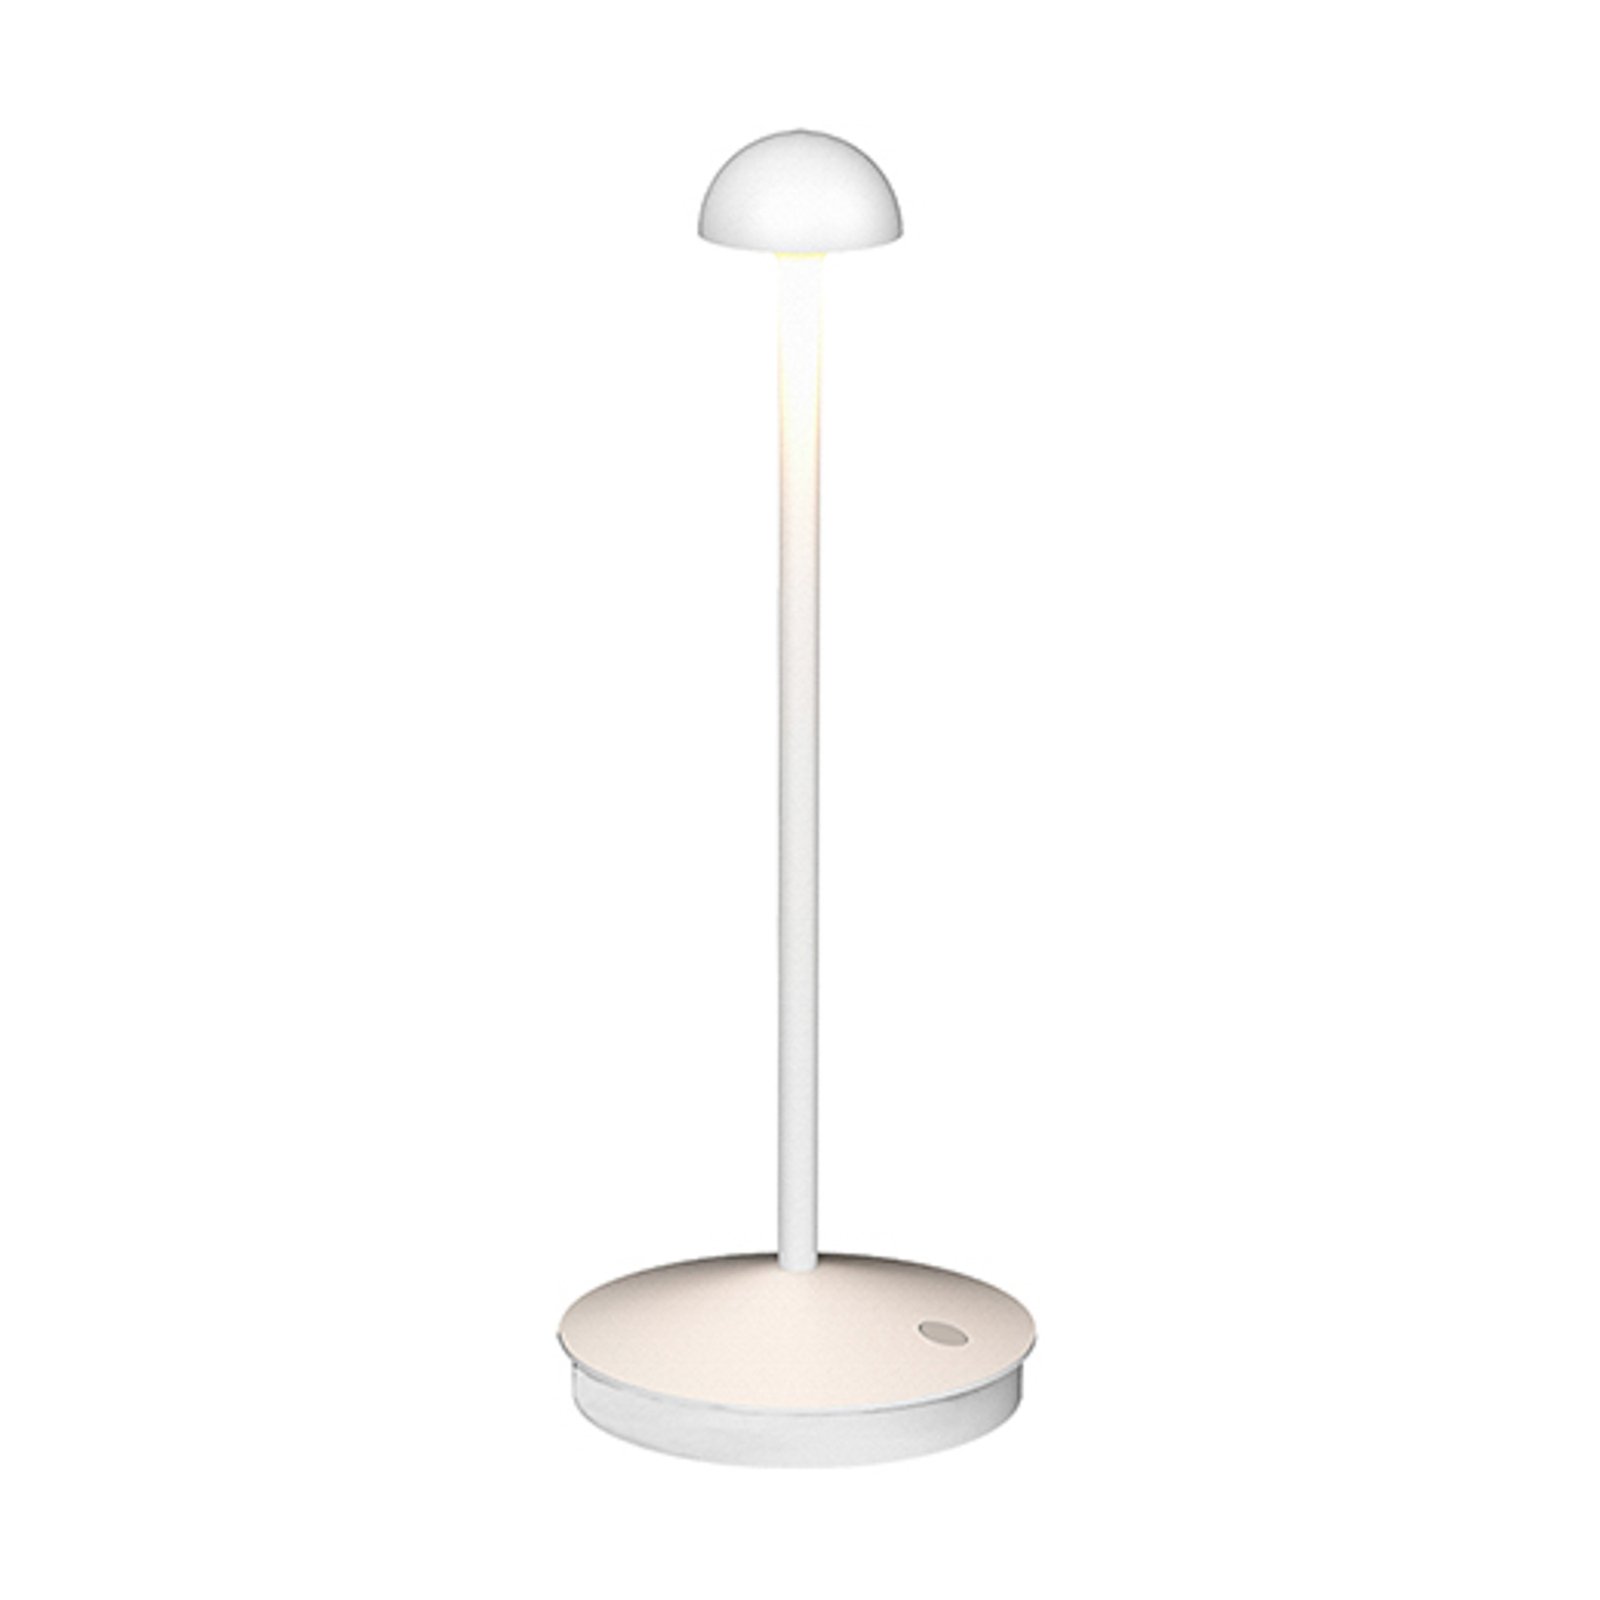 LED accu-tafellamp E313 voor buiten, mat wit